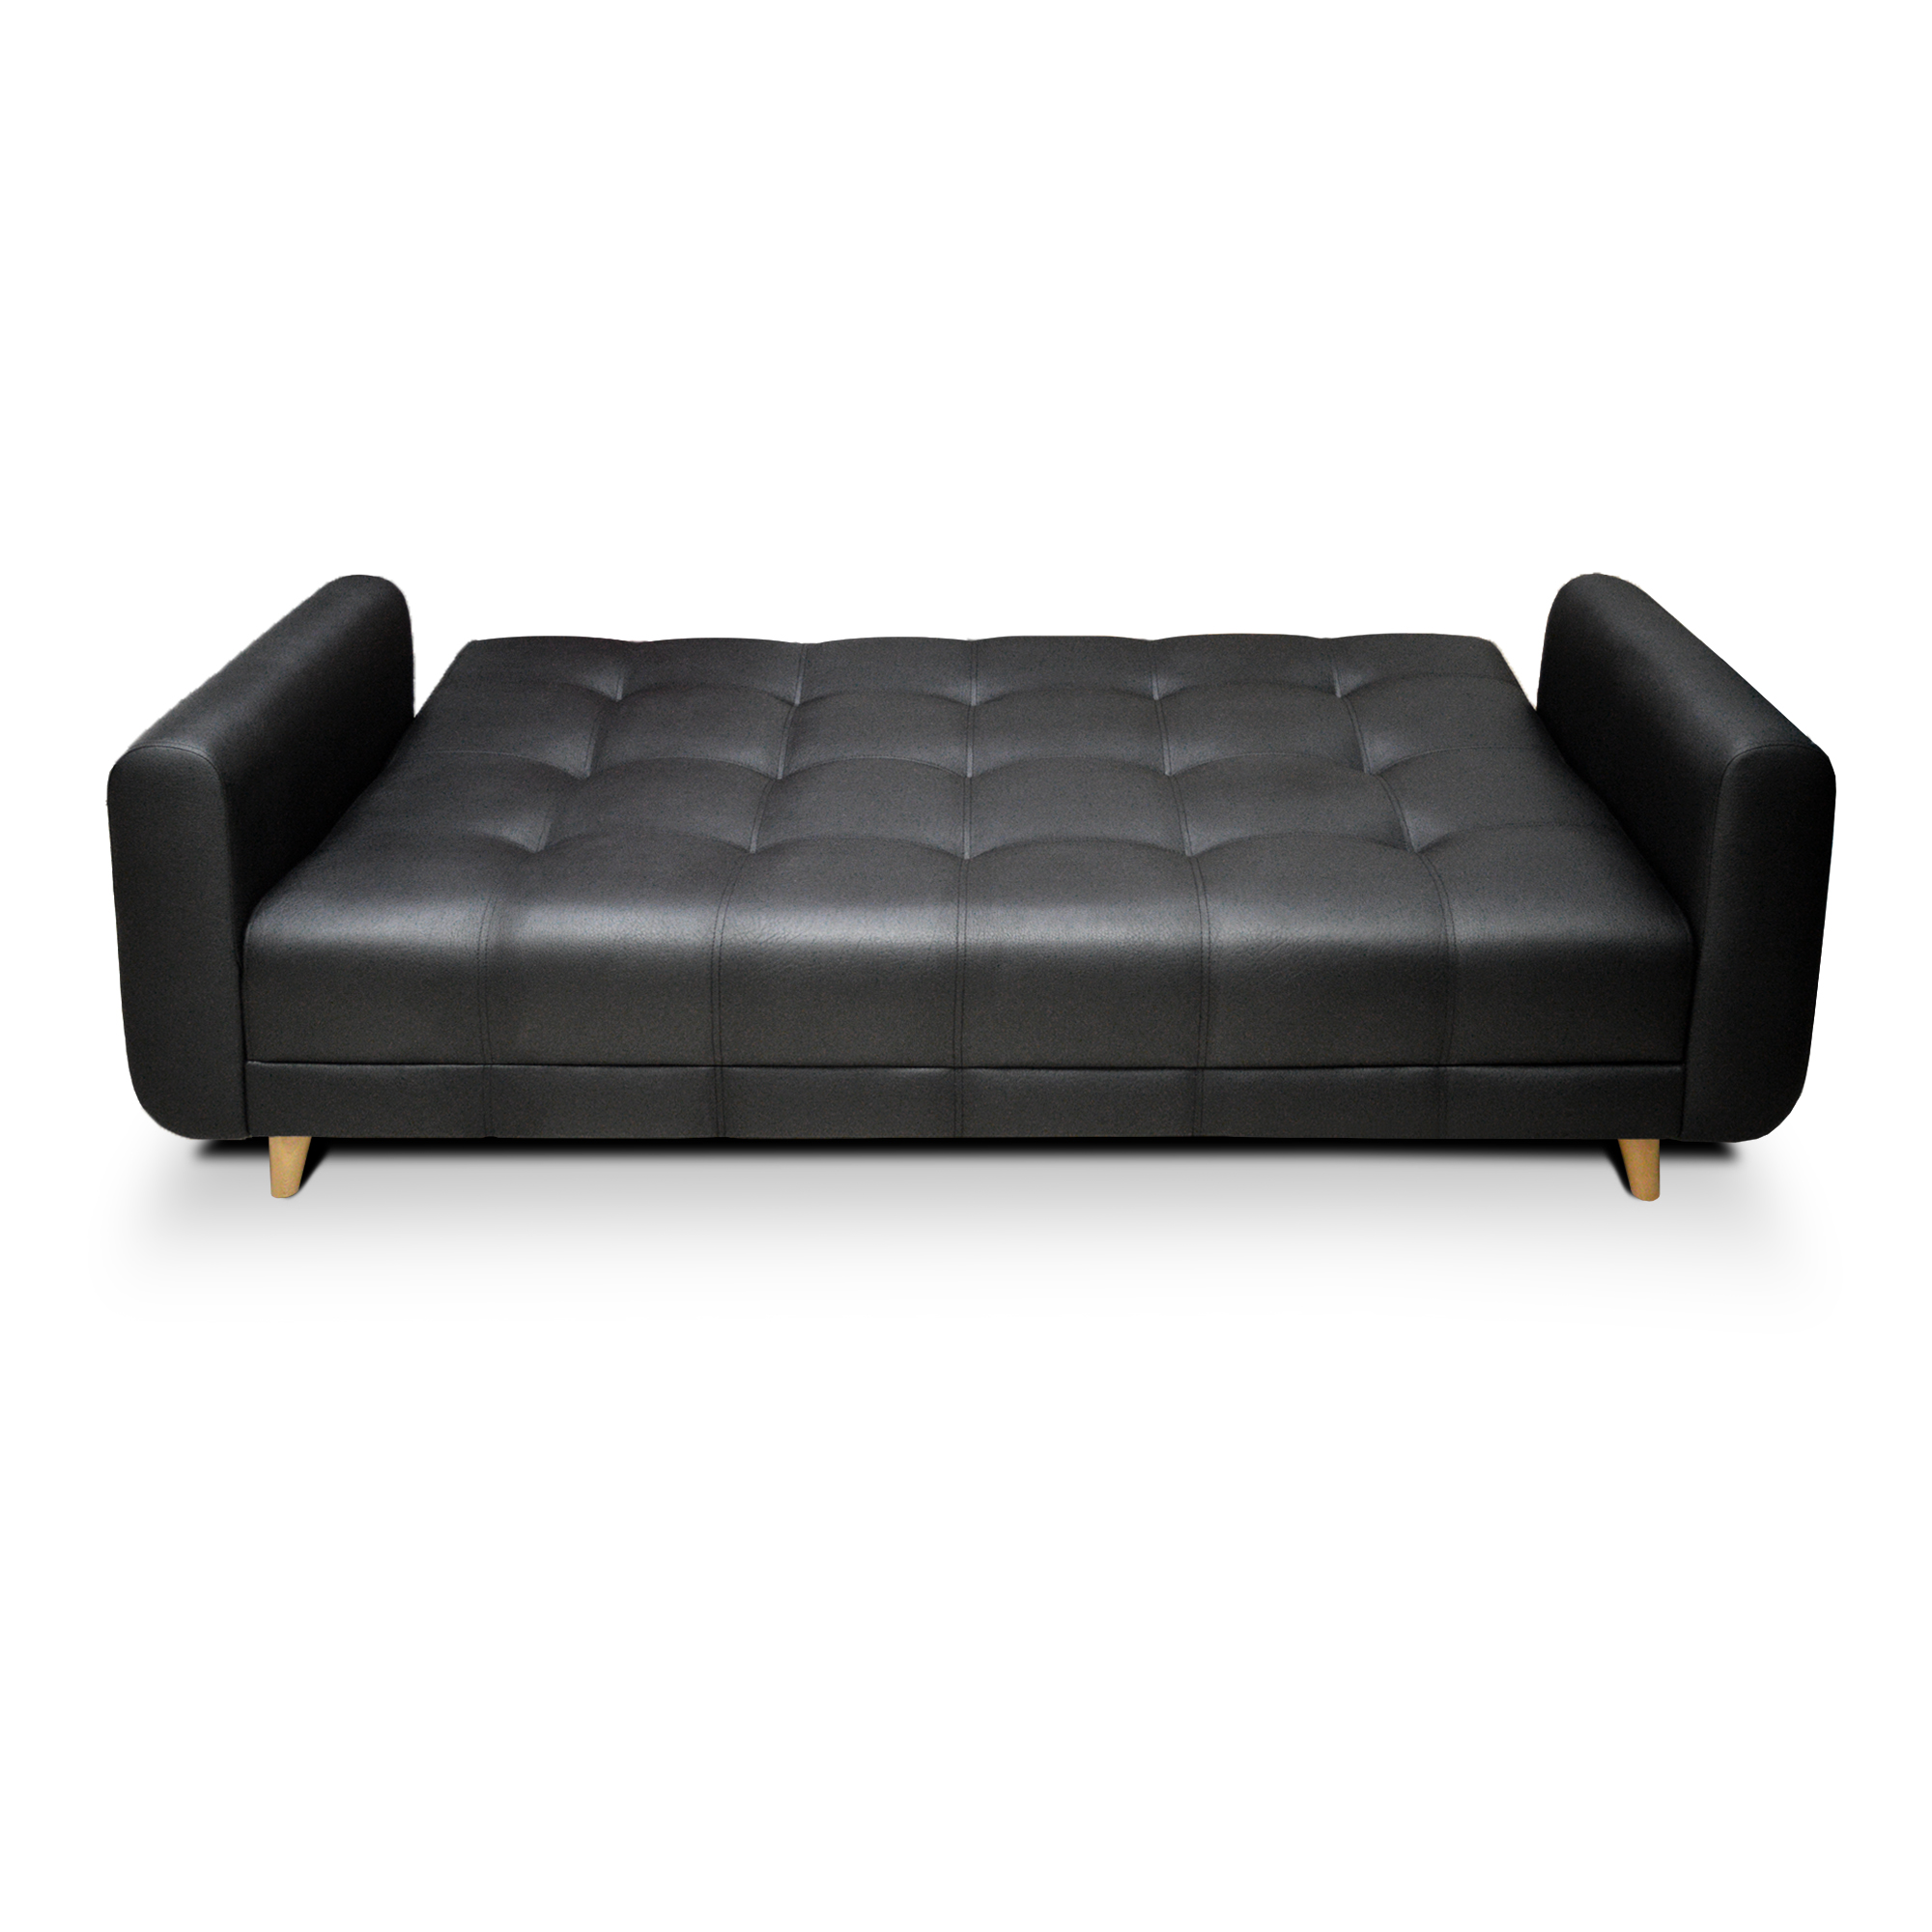 Sofa Cama Comfort Sistema Clic Clac Color Negro